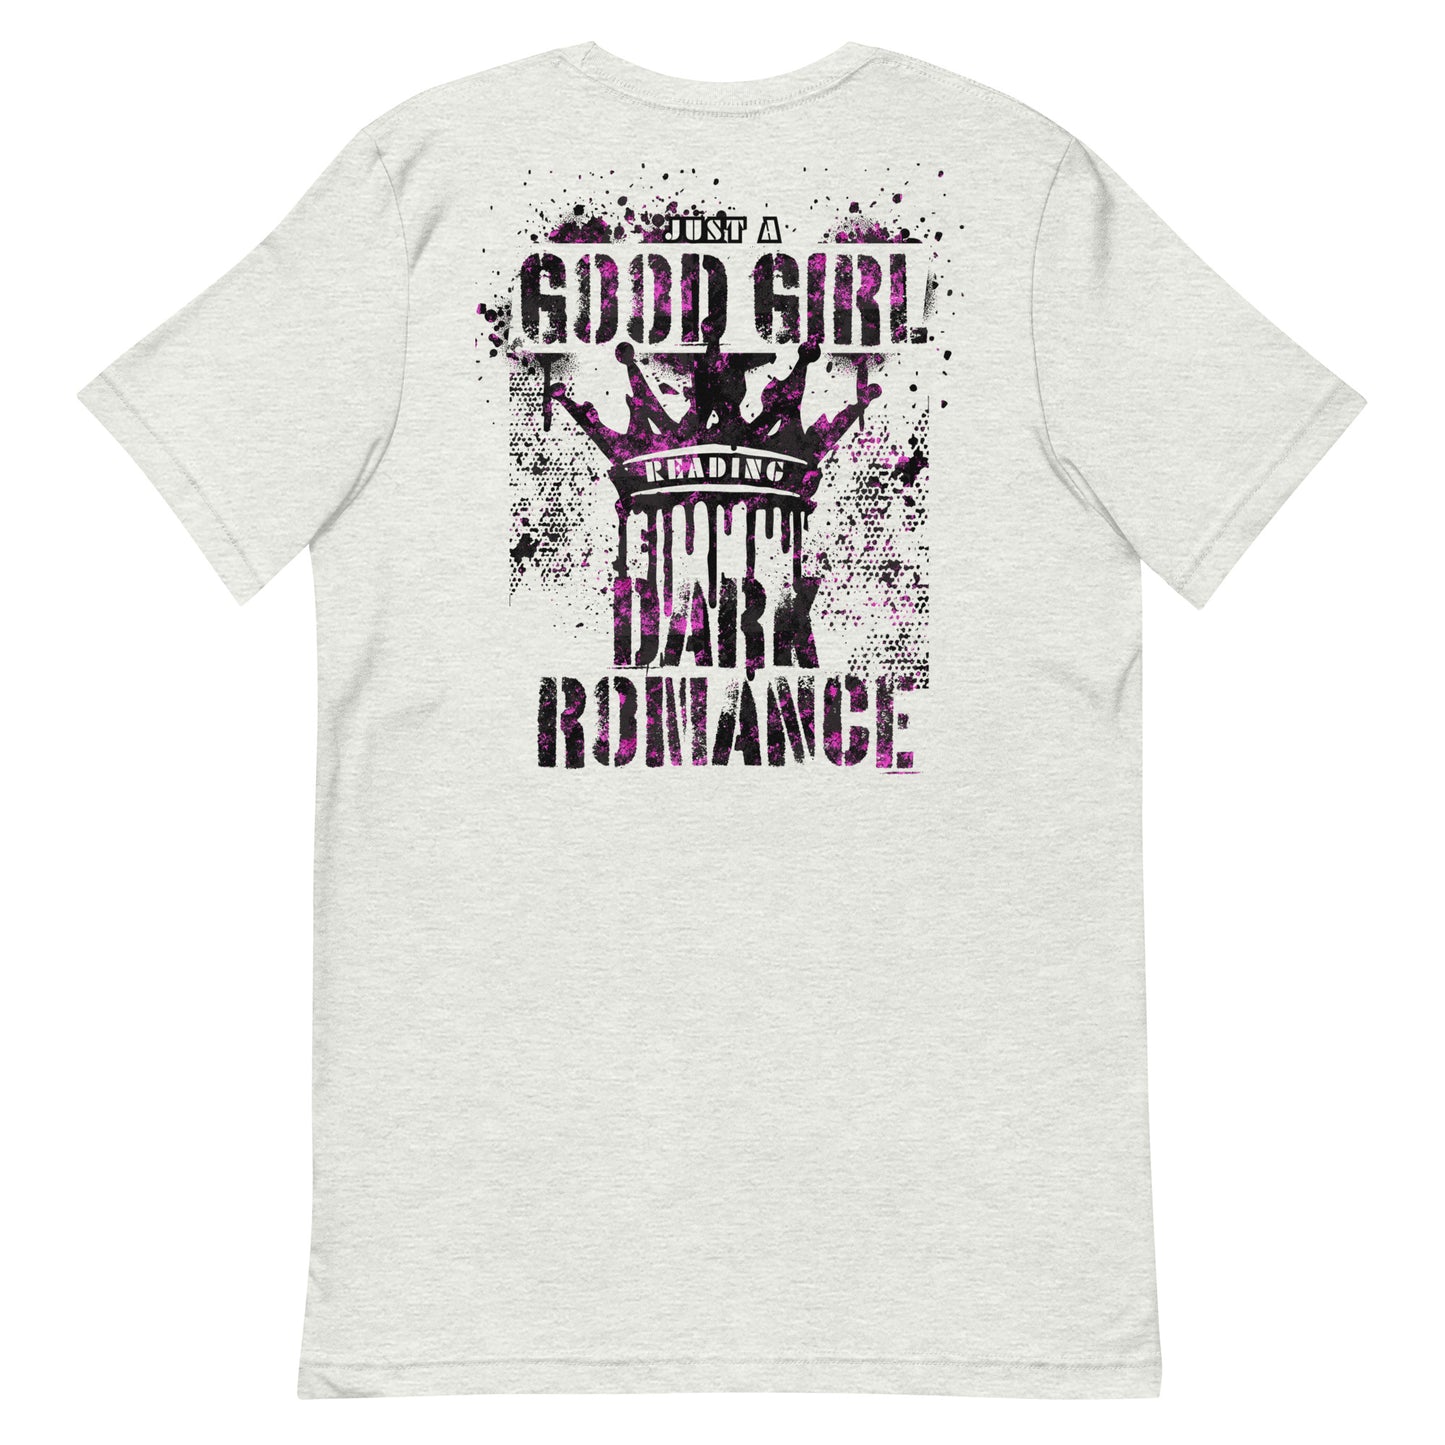 just a good girl reading dark romance t-shirt